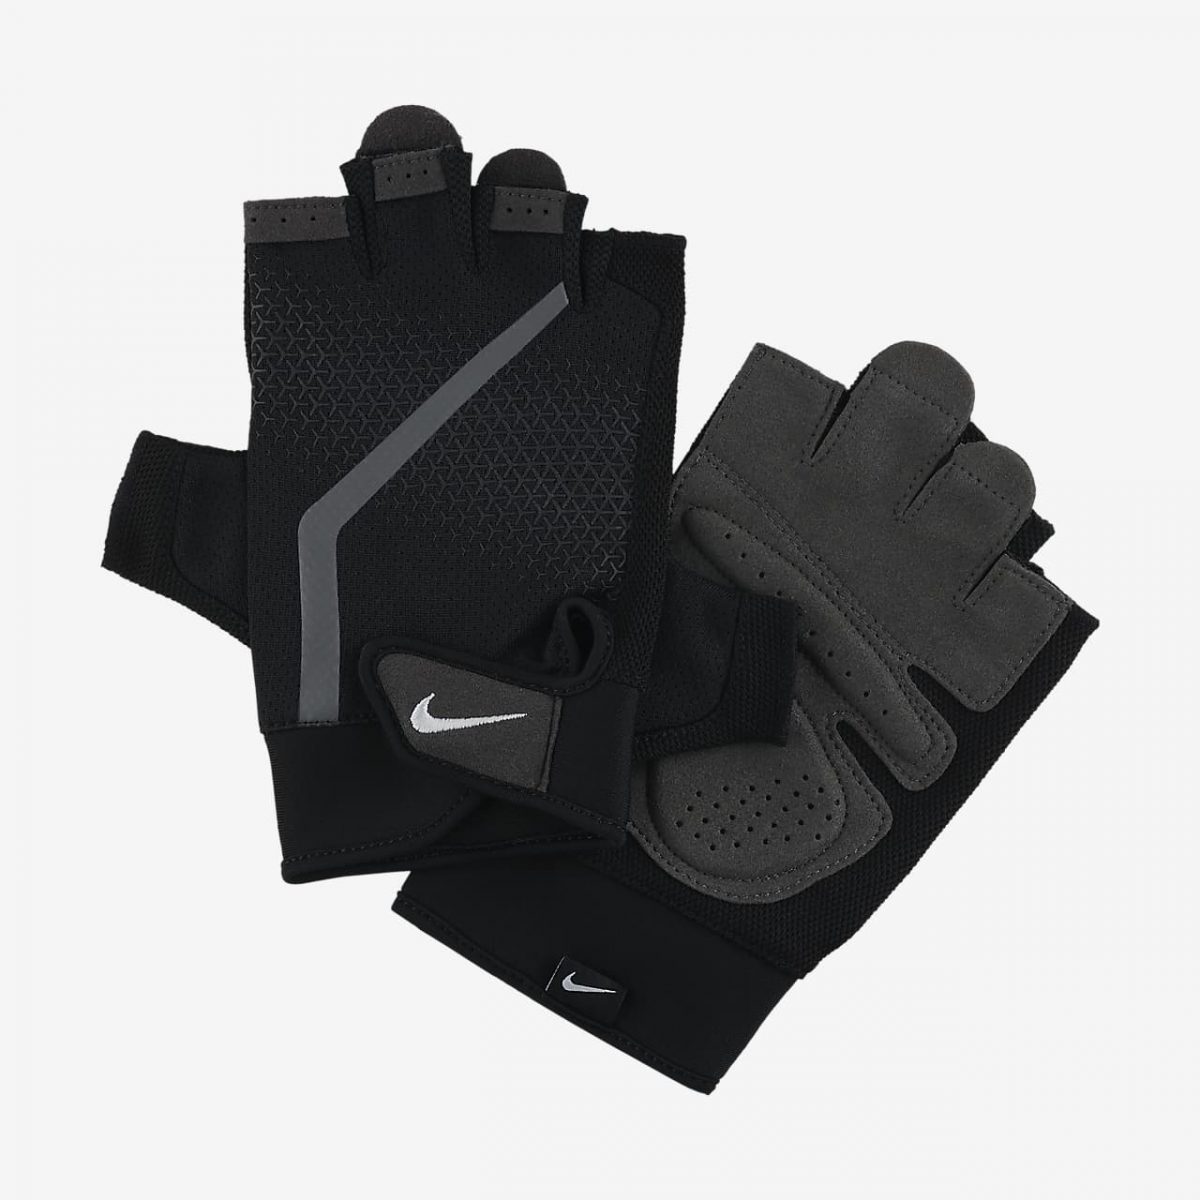 Мужские перчатки Nike Extreme фото